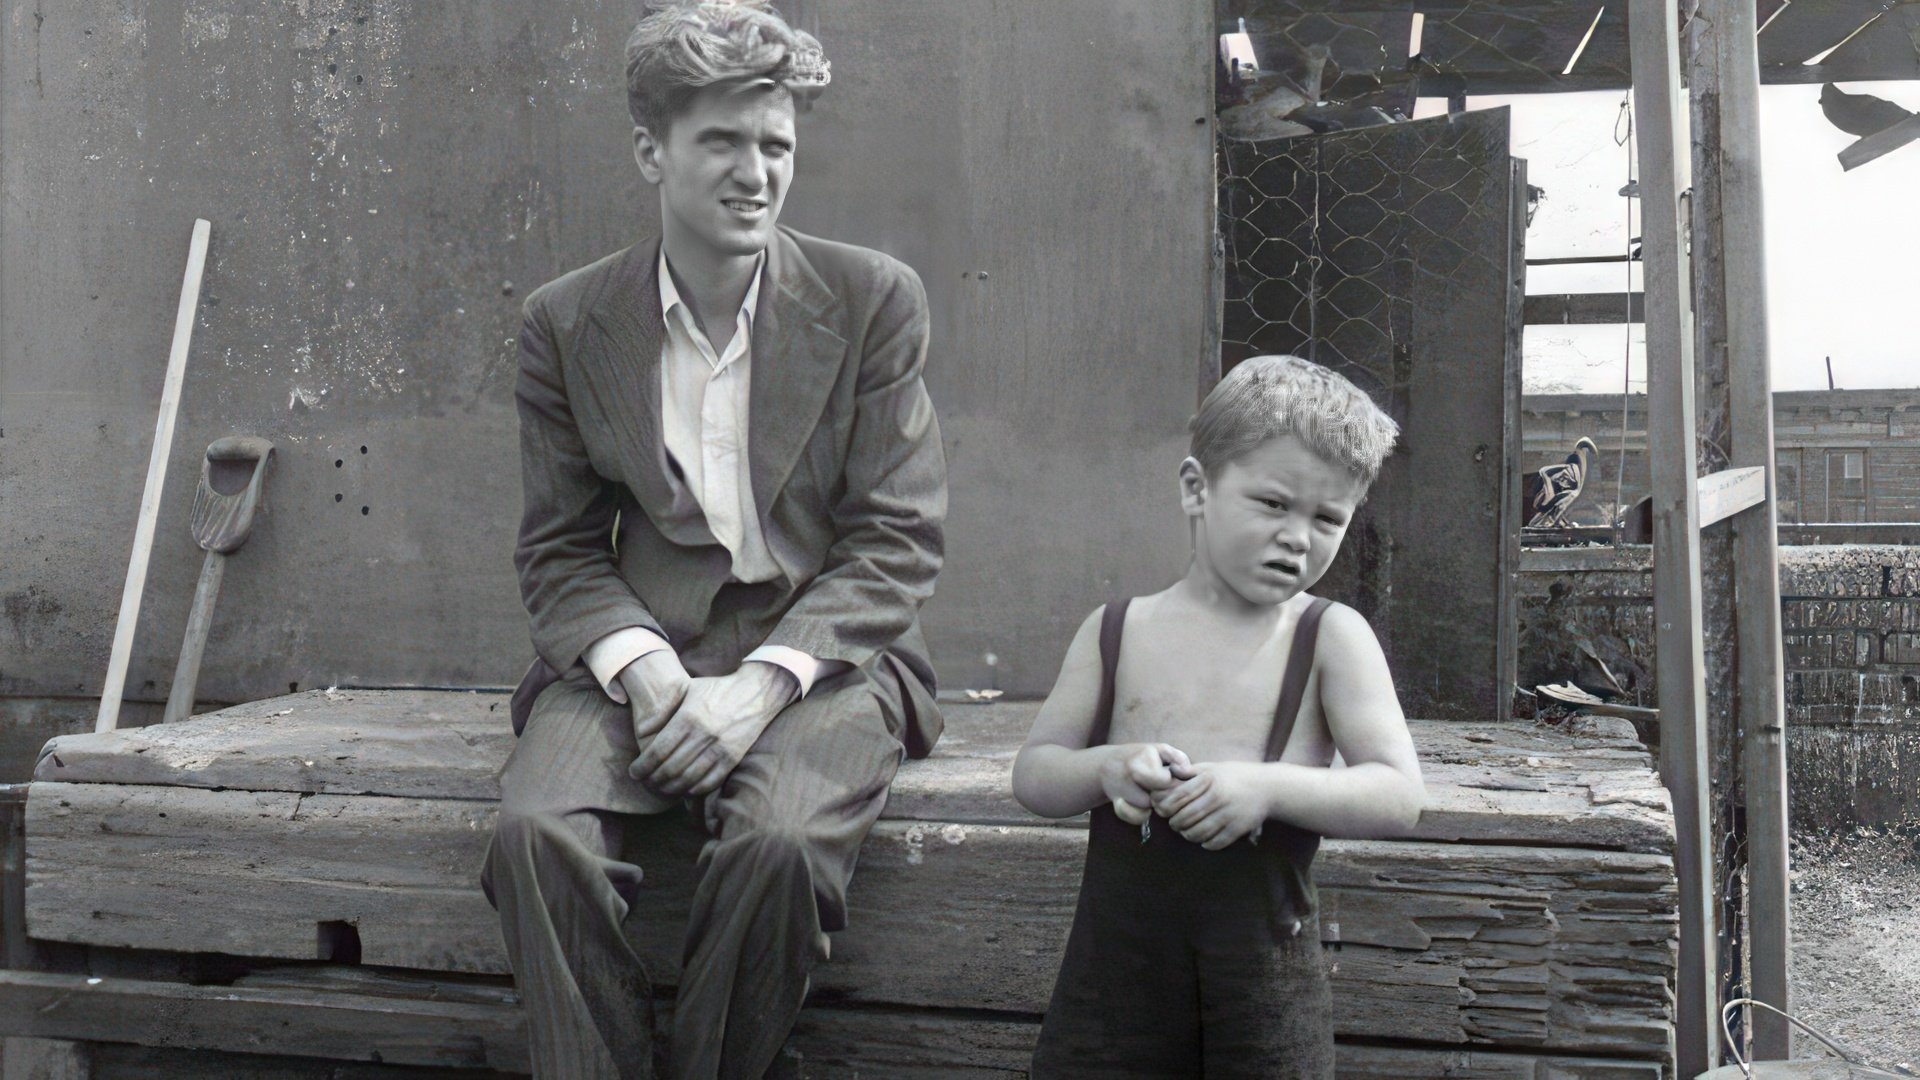 Robert De Niro with his father